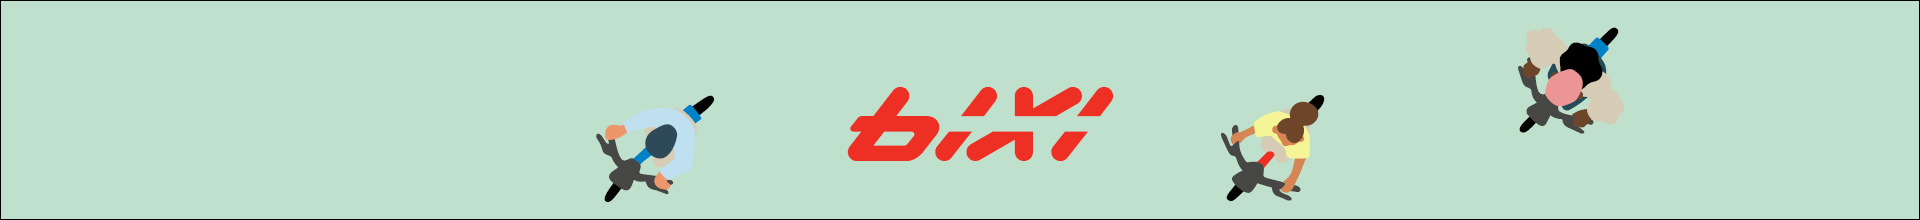 Bixi Inc Bandeau Vide 1920x220